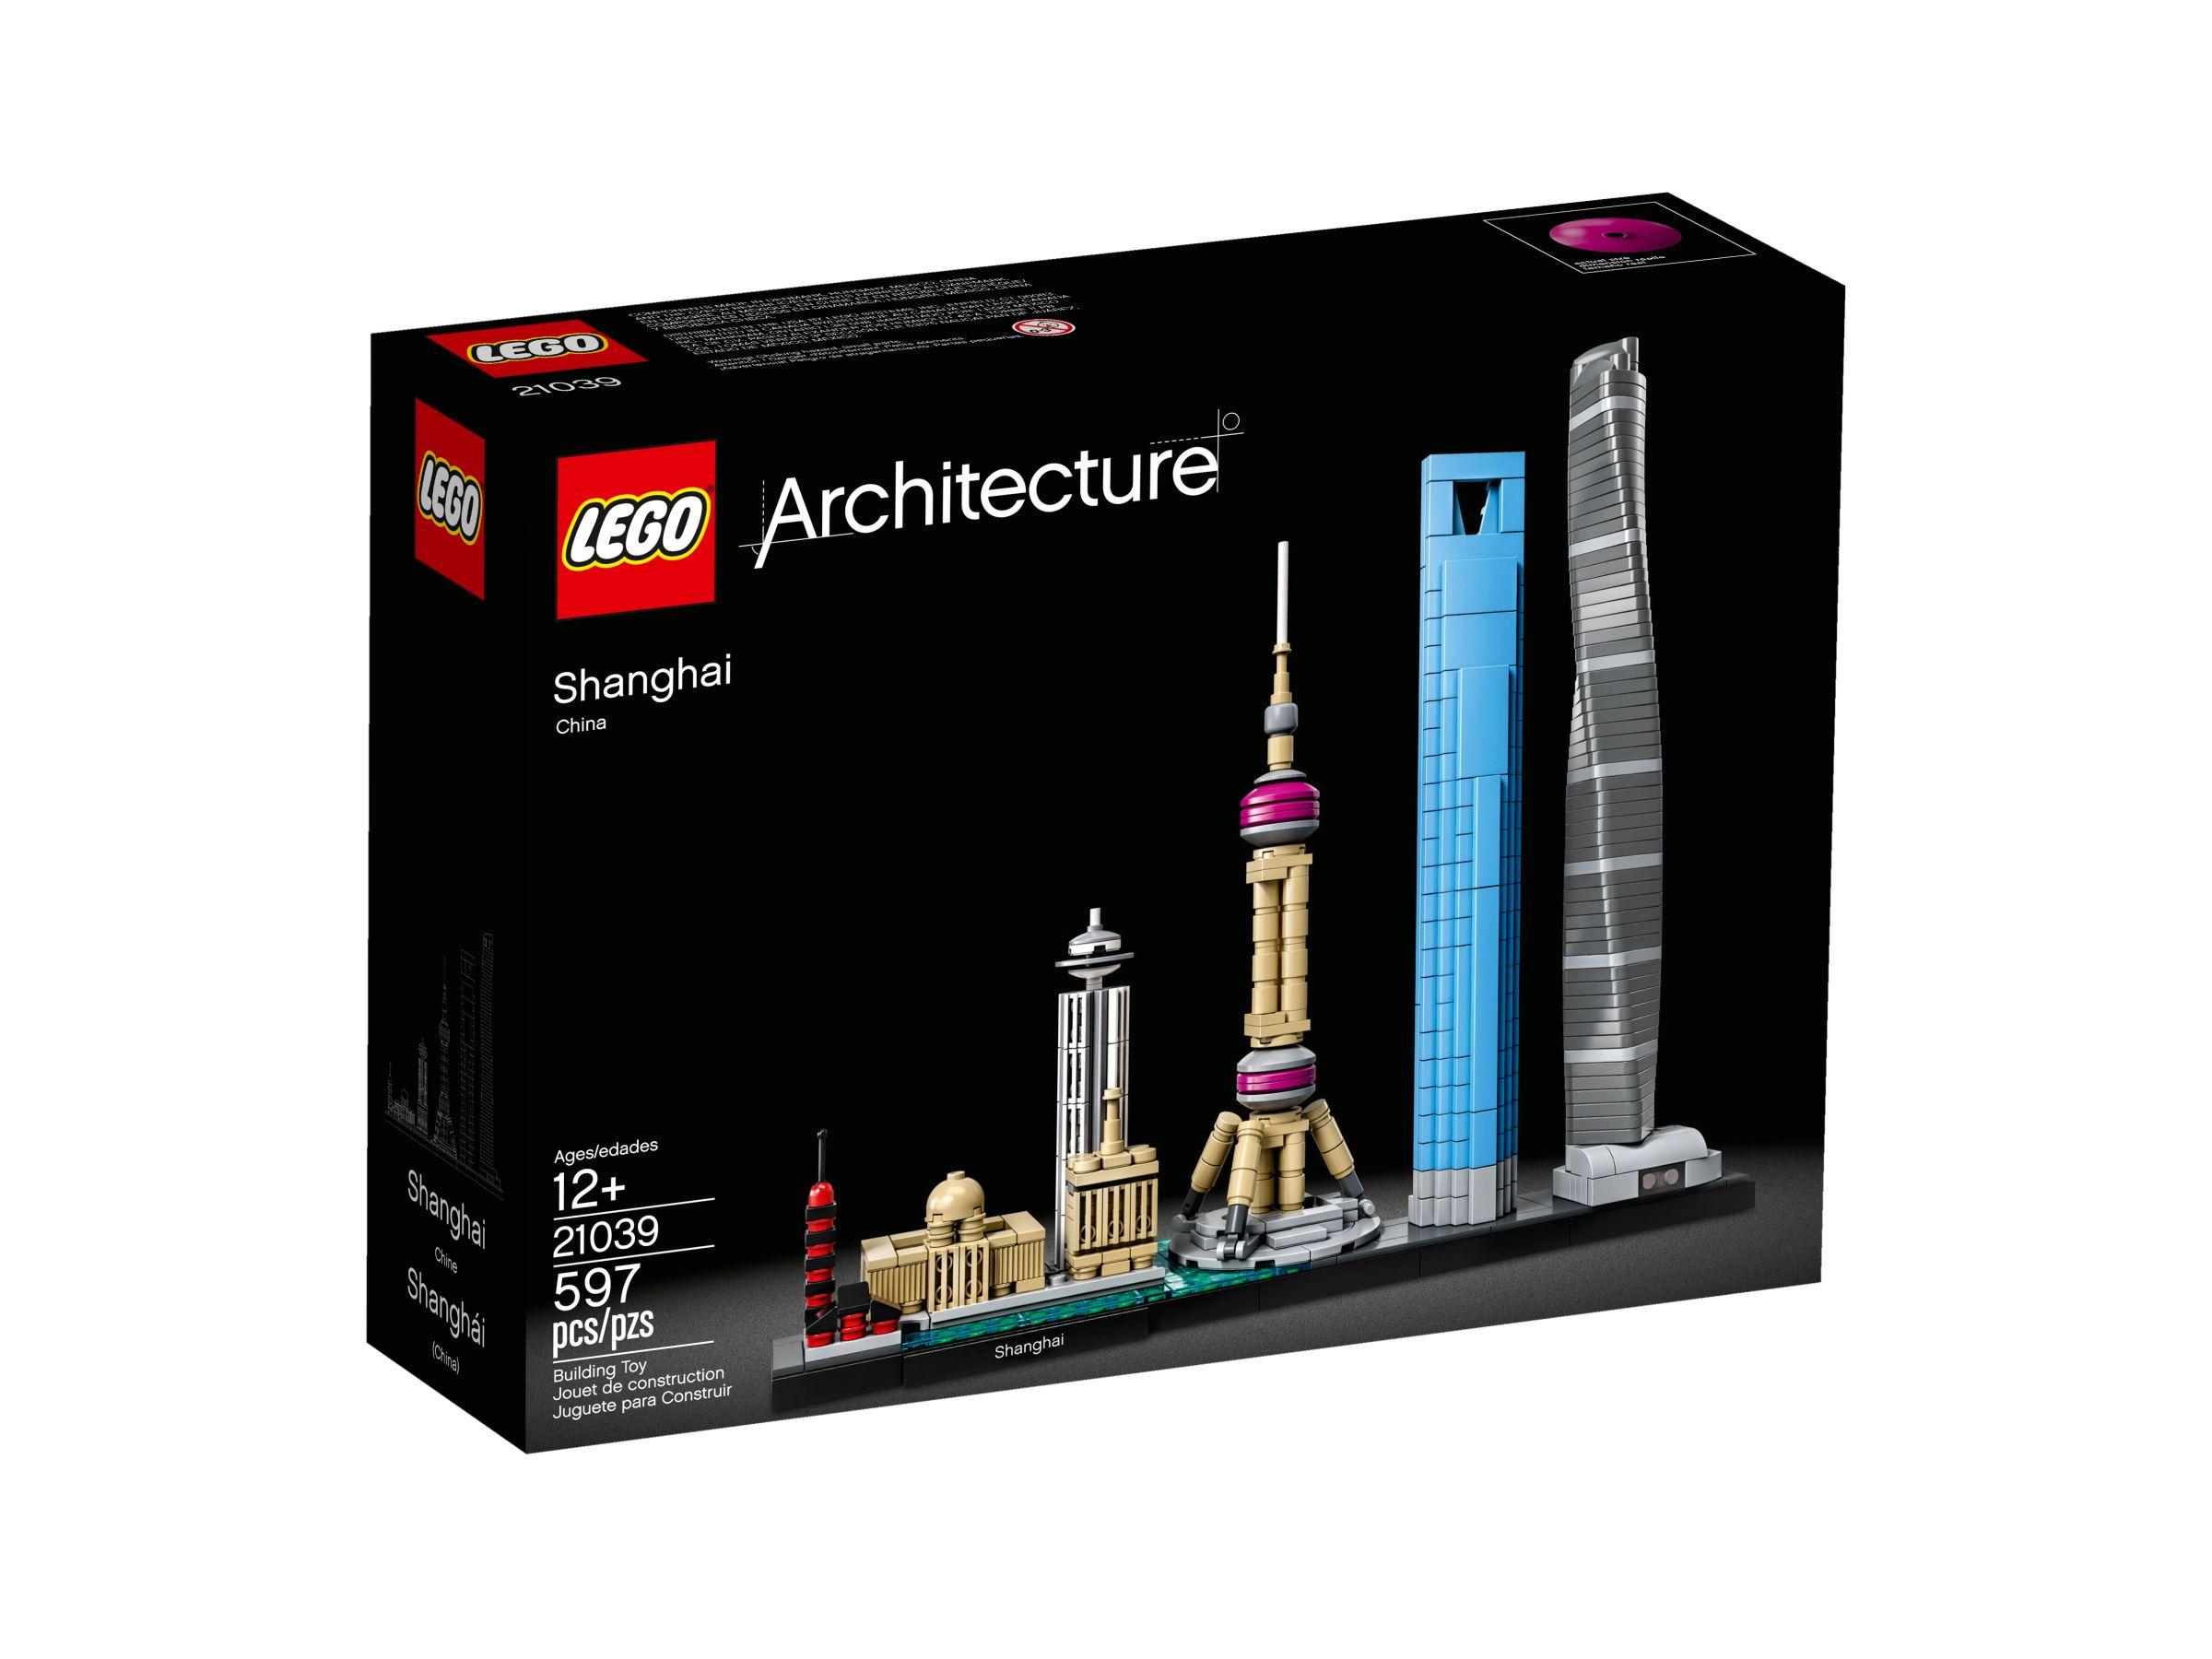 LEGO Architecture 21039 Shanghai LEGO_21039_alt1.jpg